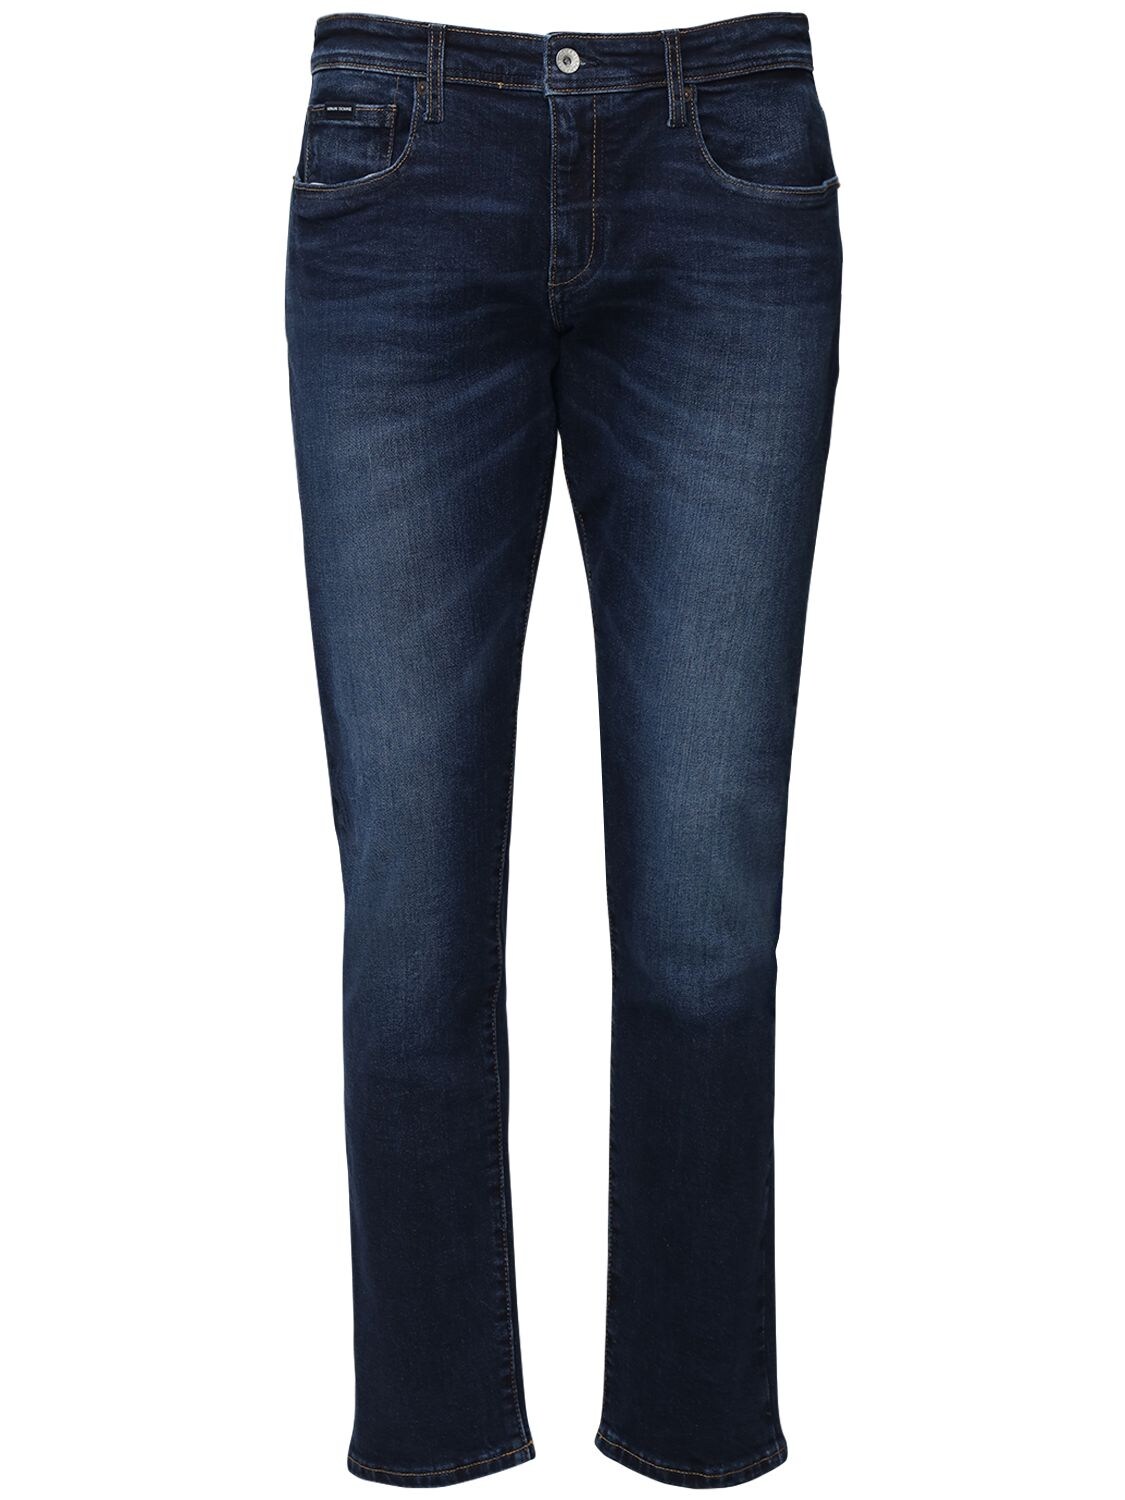 12.5oz Medium Dark Blue Wash Jeans